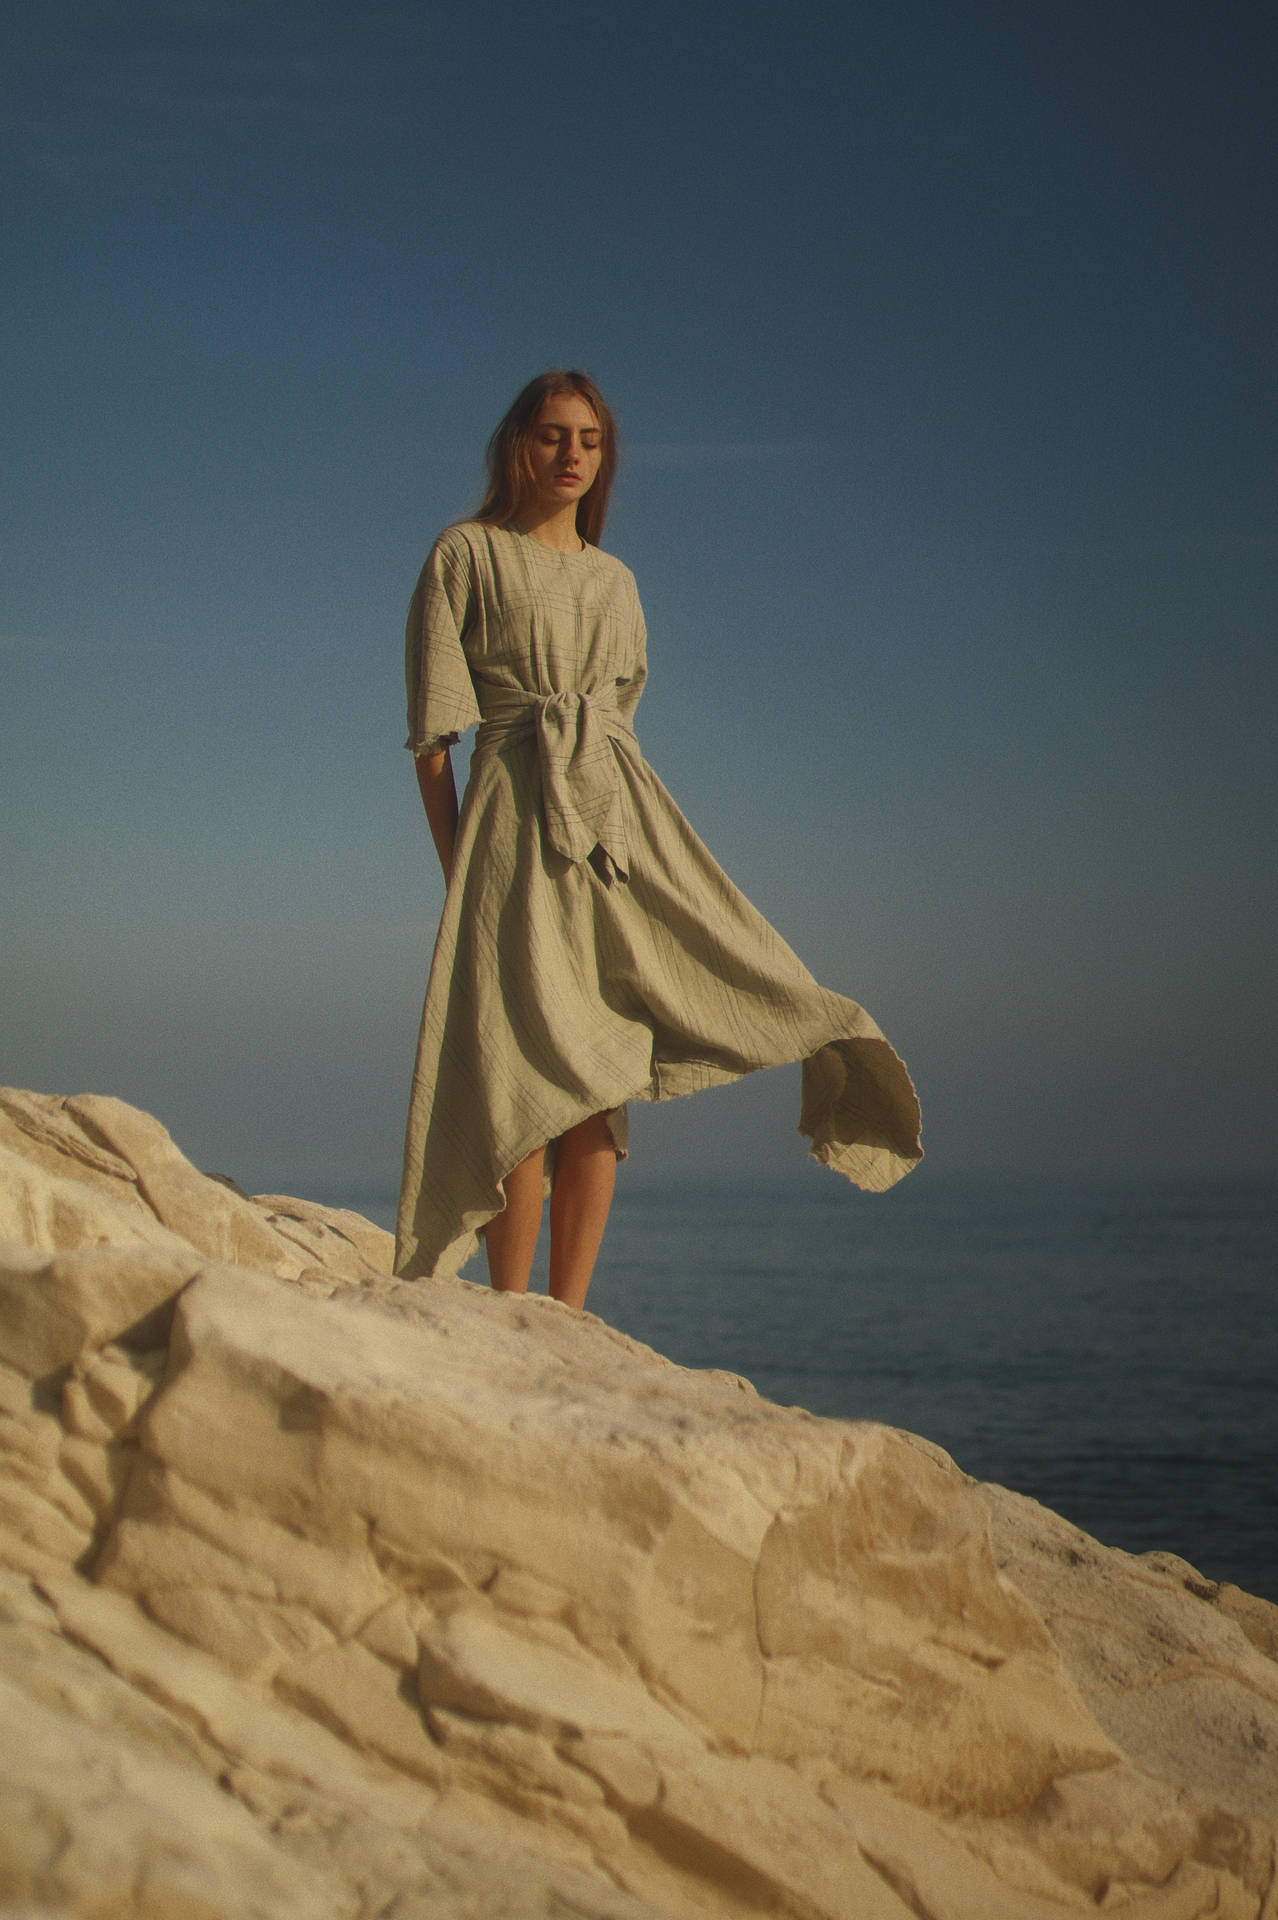 Model Gaia Vigo Pajon shows off a stunning designer dress, perfect for a summer's day. Wallpaper